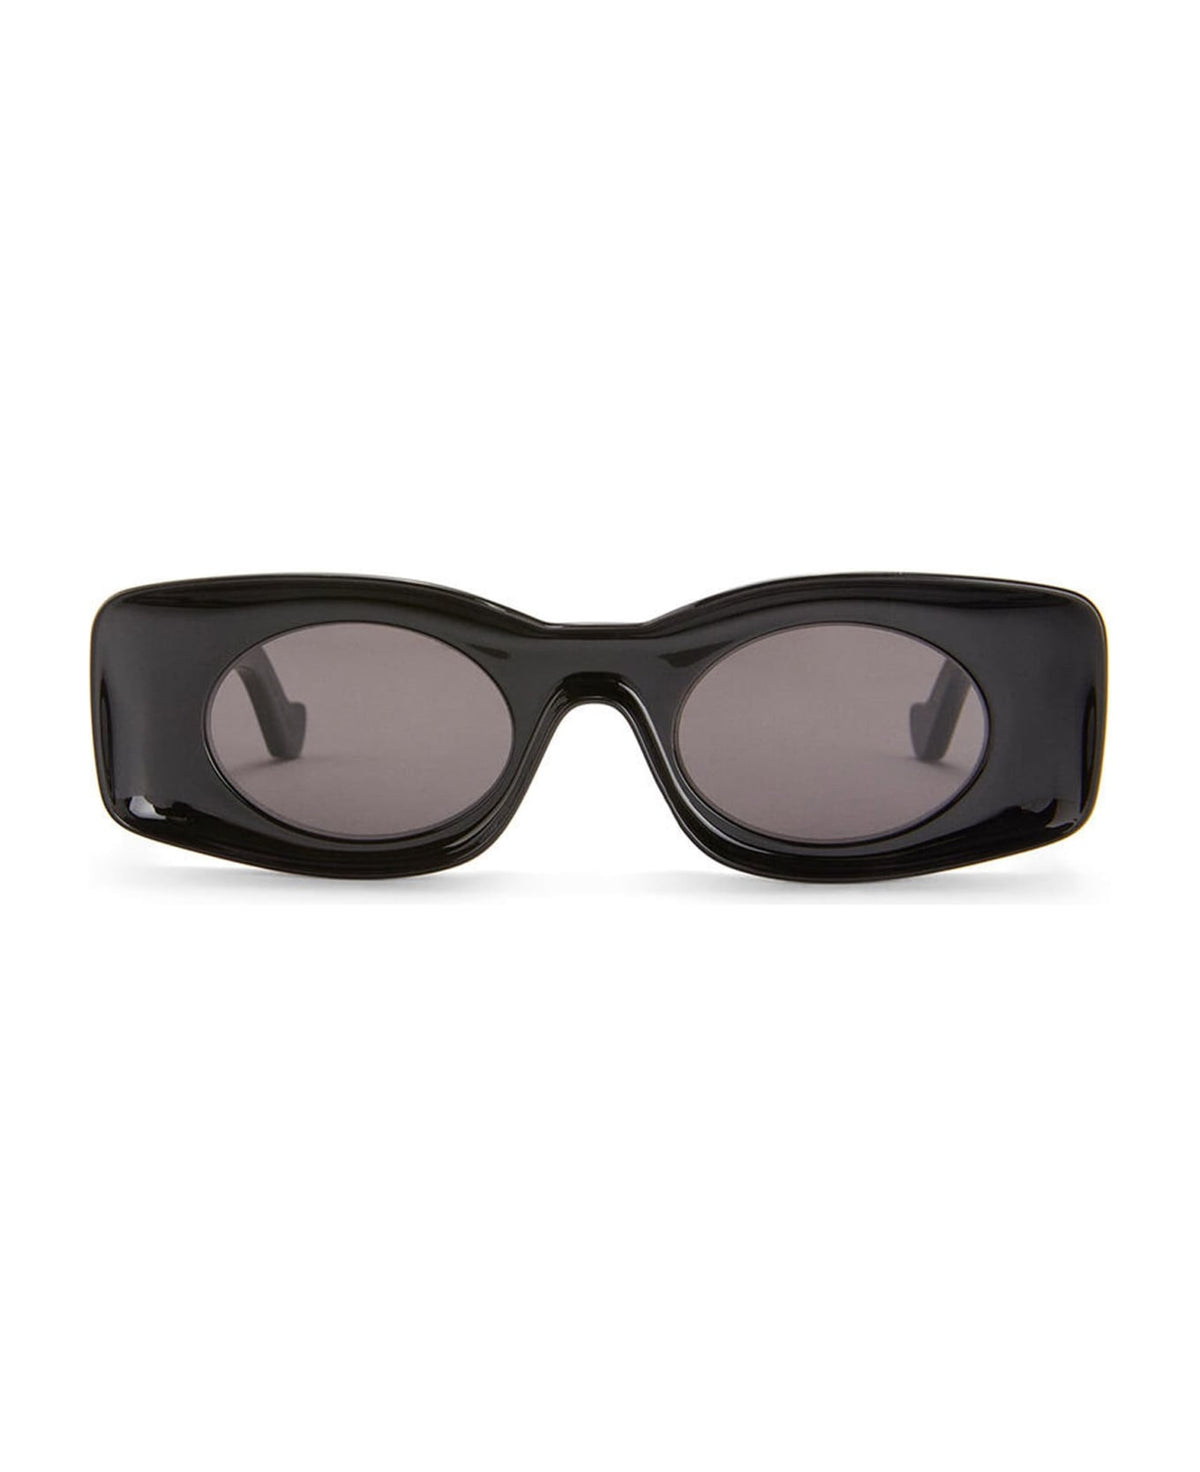 Lw40033i - Shiny Black Sunglasses